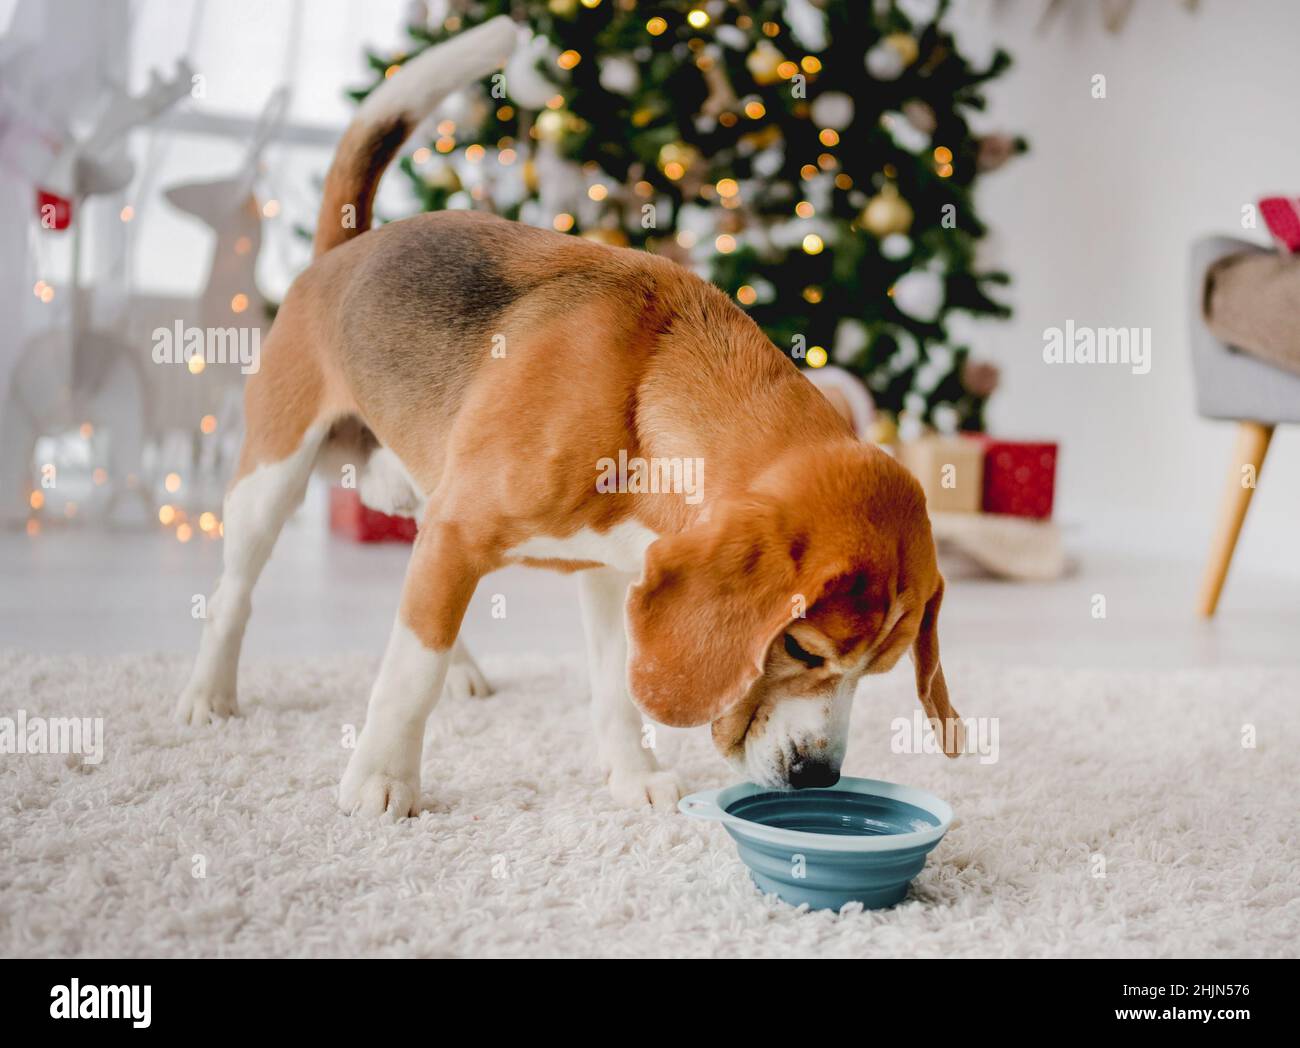 https://c8.alamy.com/comp/2HJN576/beagle-dog-in-christmas-time-2HJN576.jpg